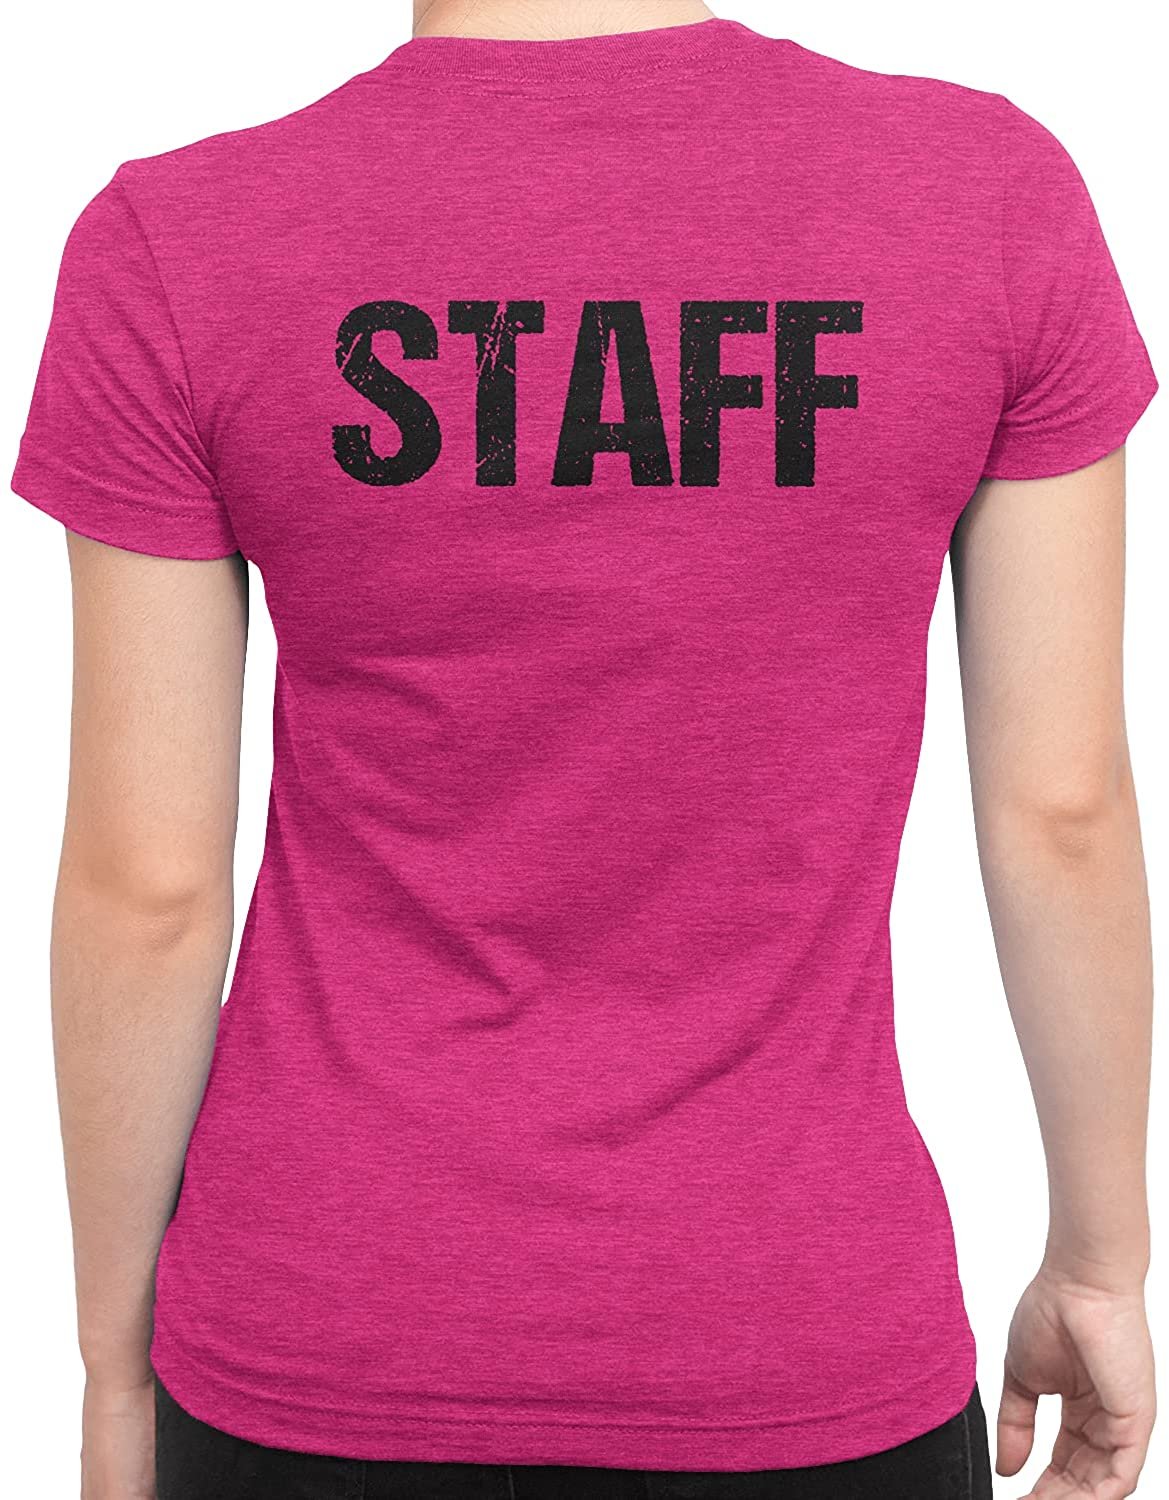 Staff Damen Kurzarm T-Shirt (Distressed Design, Heather Pink)